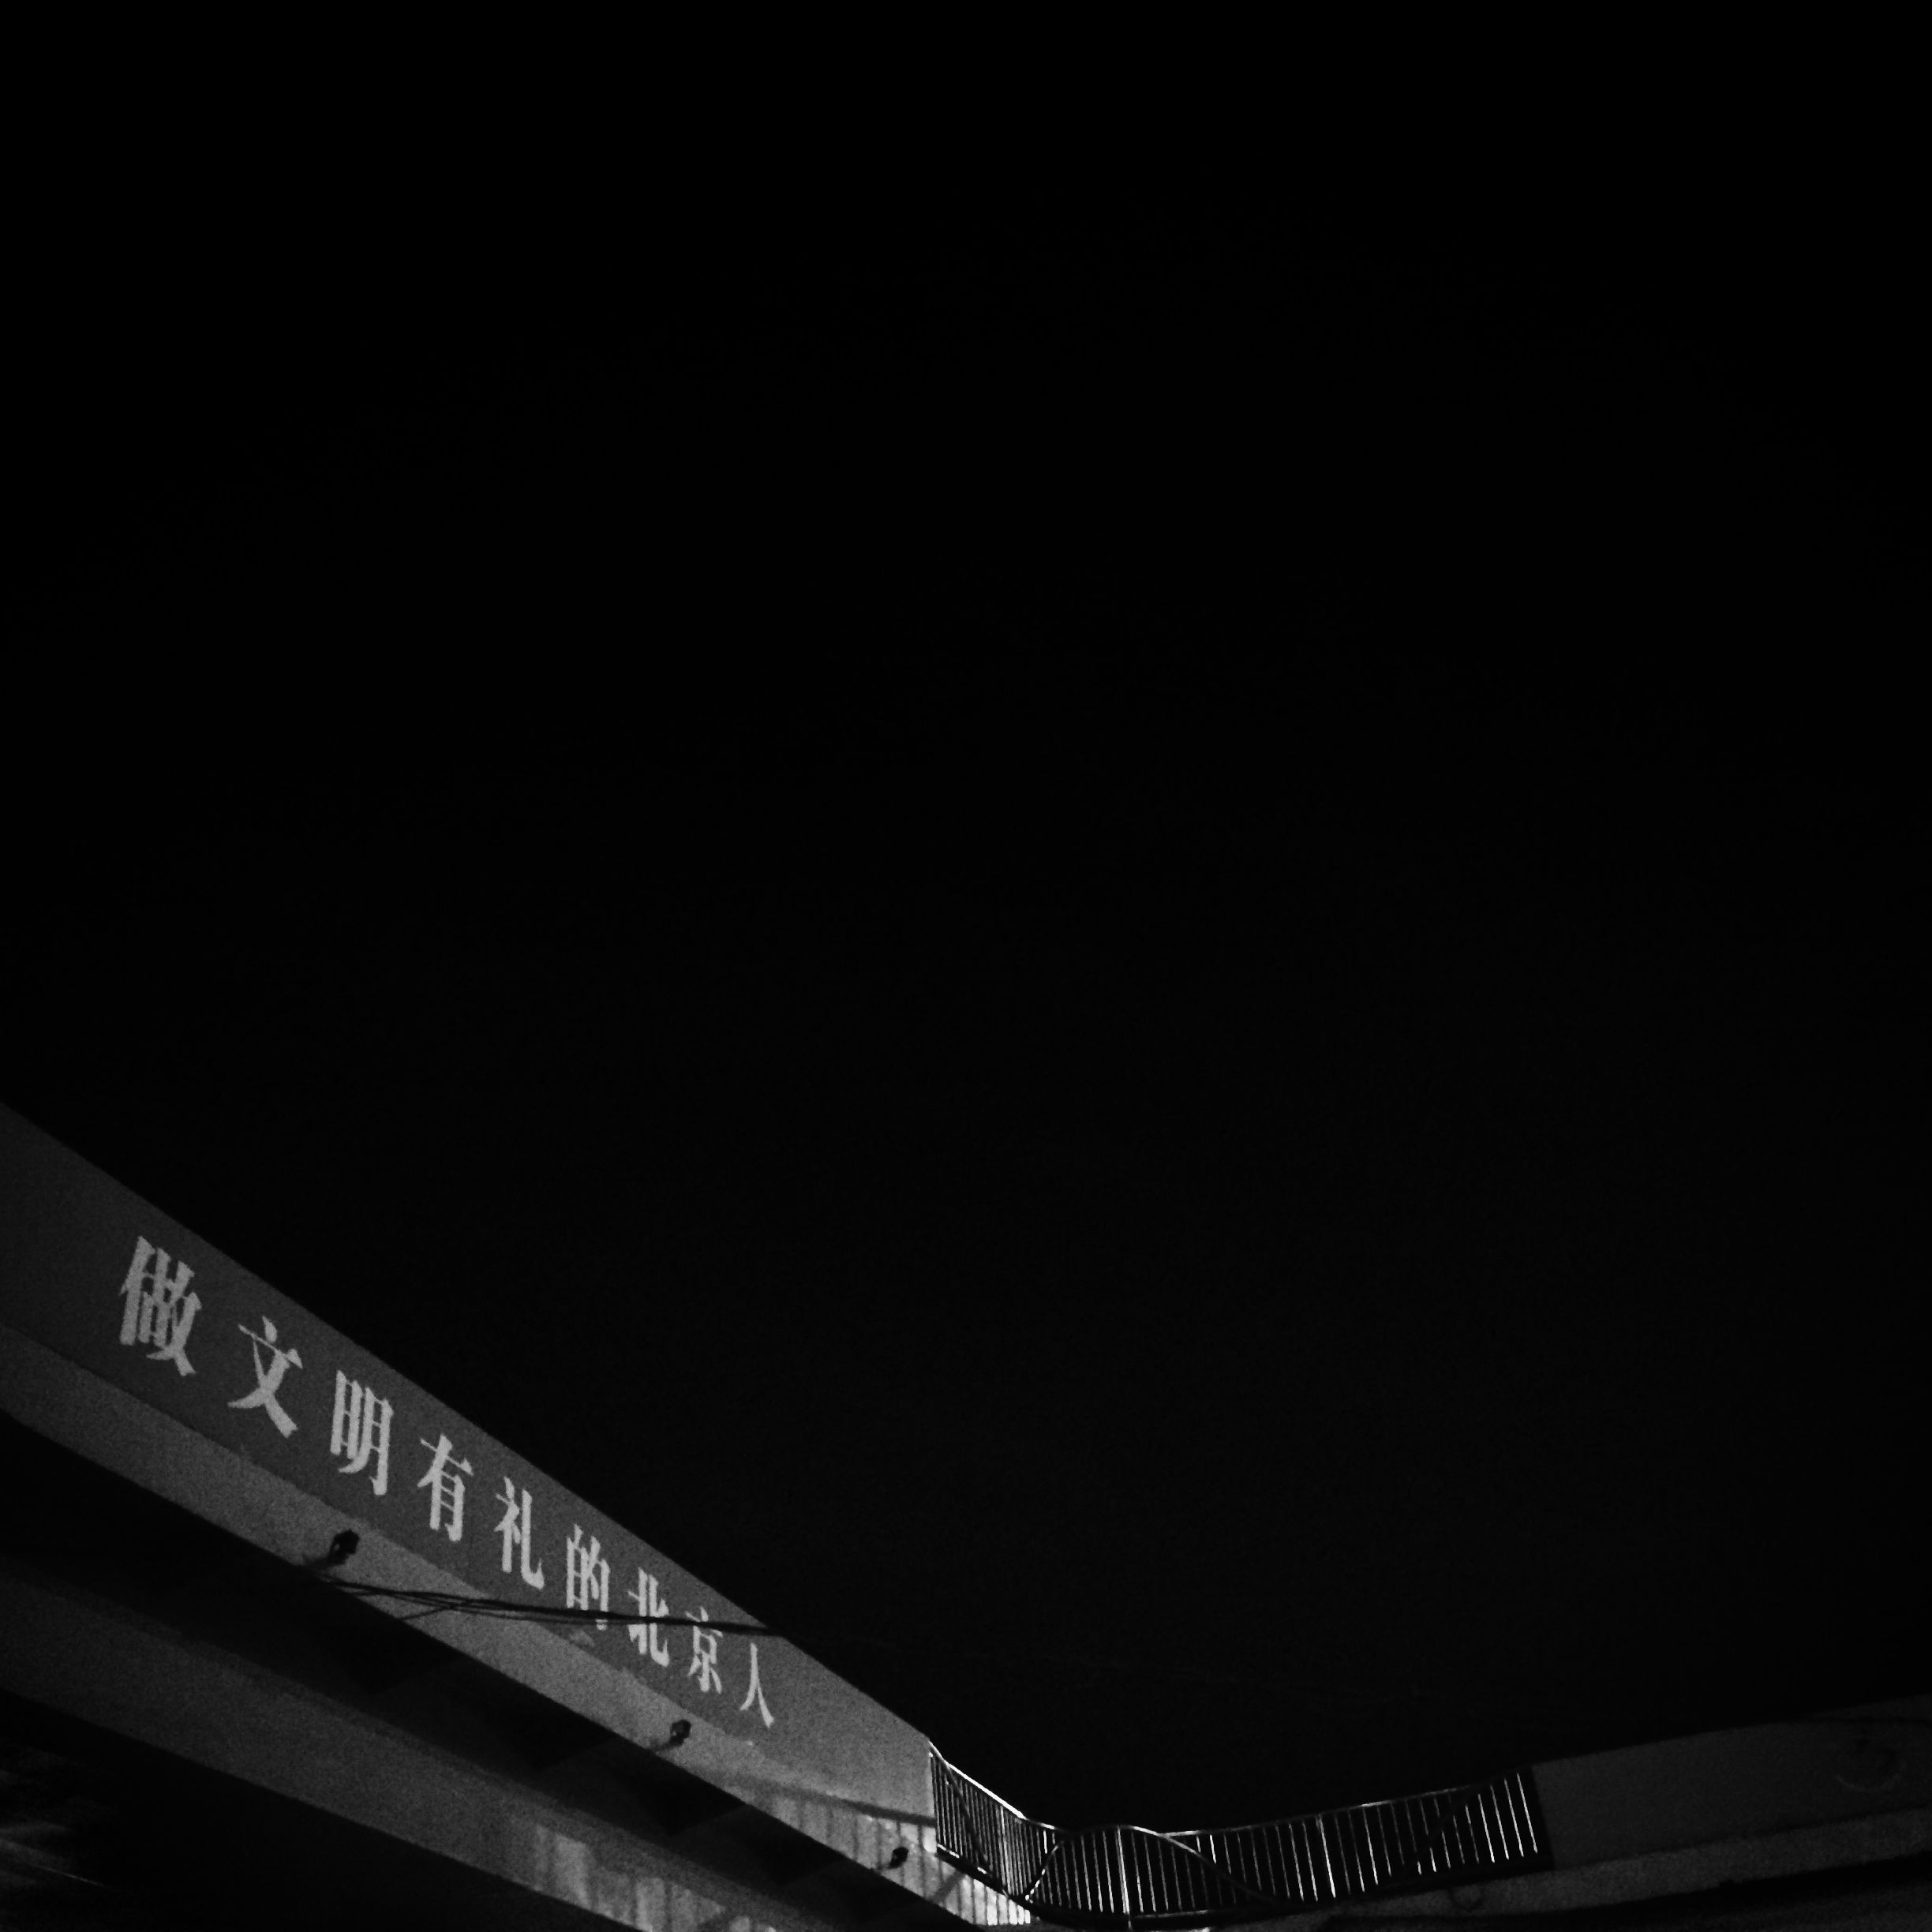 京髓 - 16 - Politeness Bridge (Beijing, 2015).JPG